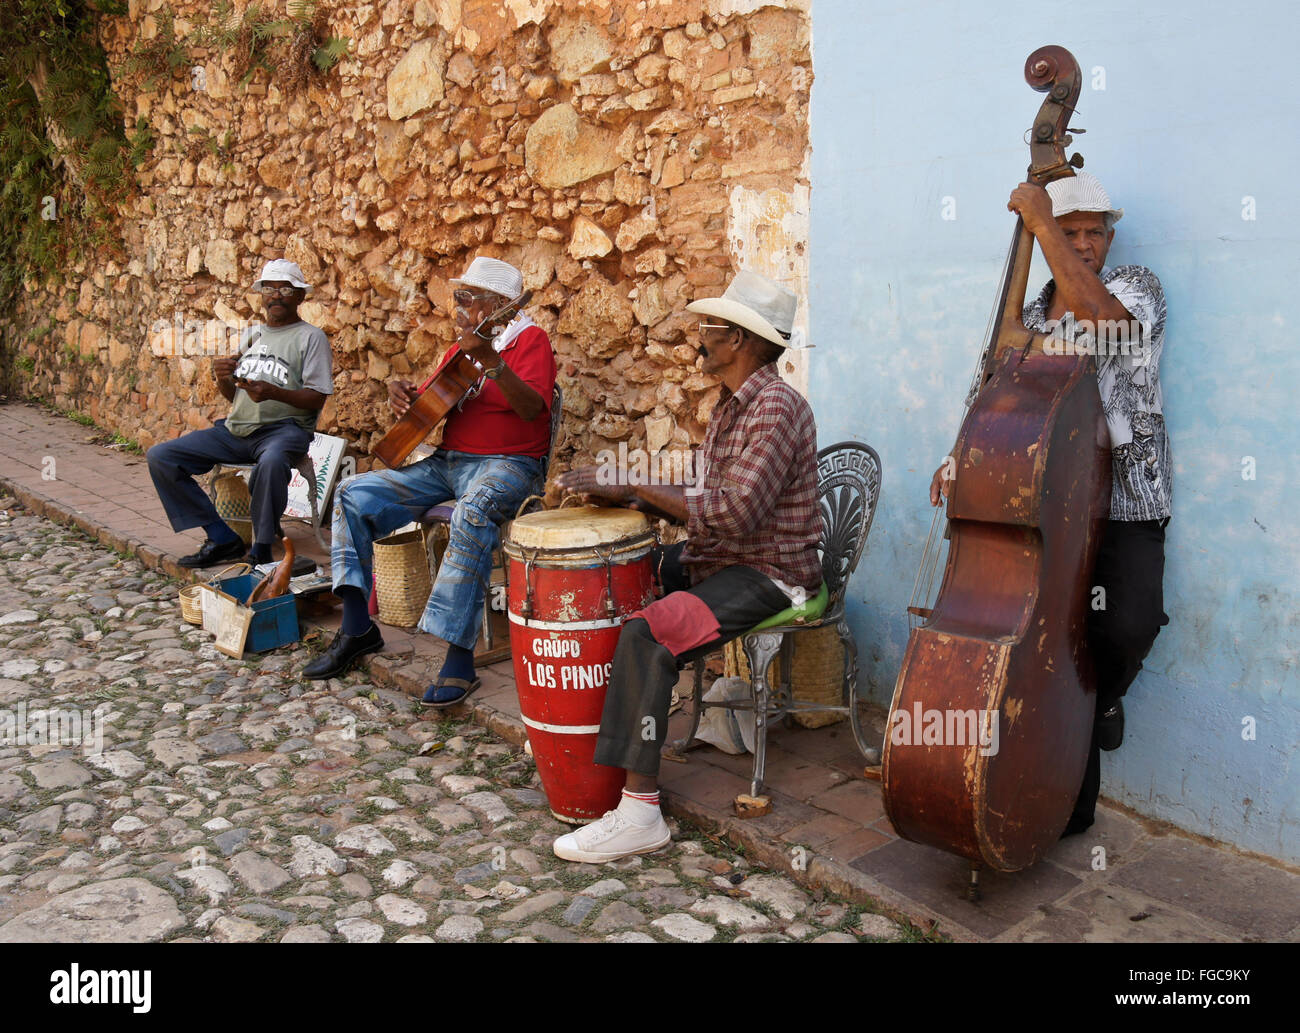 Making music on a cobblestone street, Trinidad, Cuba Stock Photo